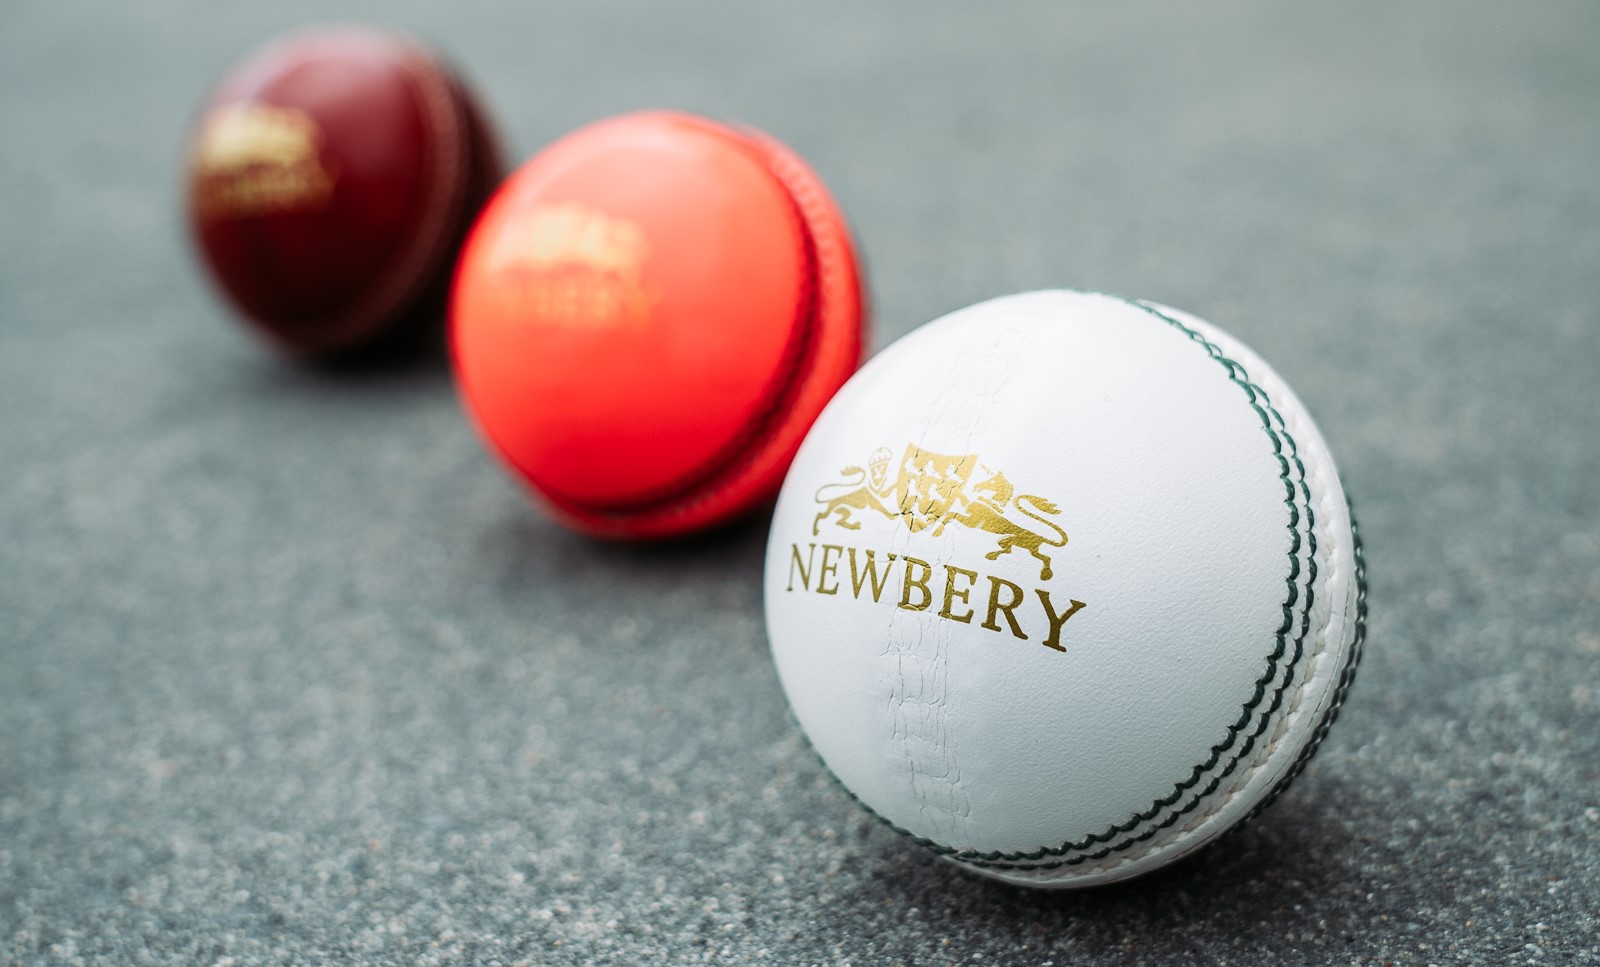 USA Cricket Announces Newbery as Official Equipment and Cricket Balls Supplier